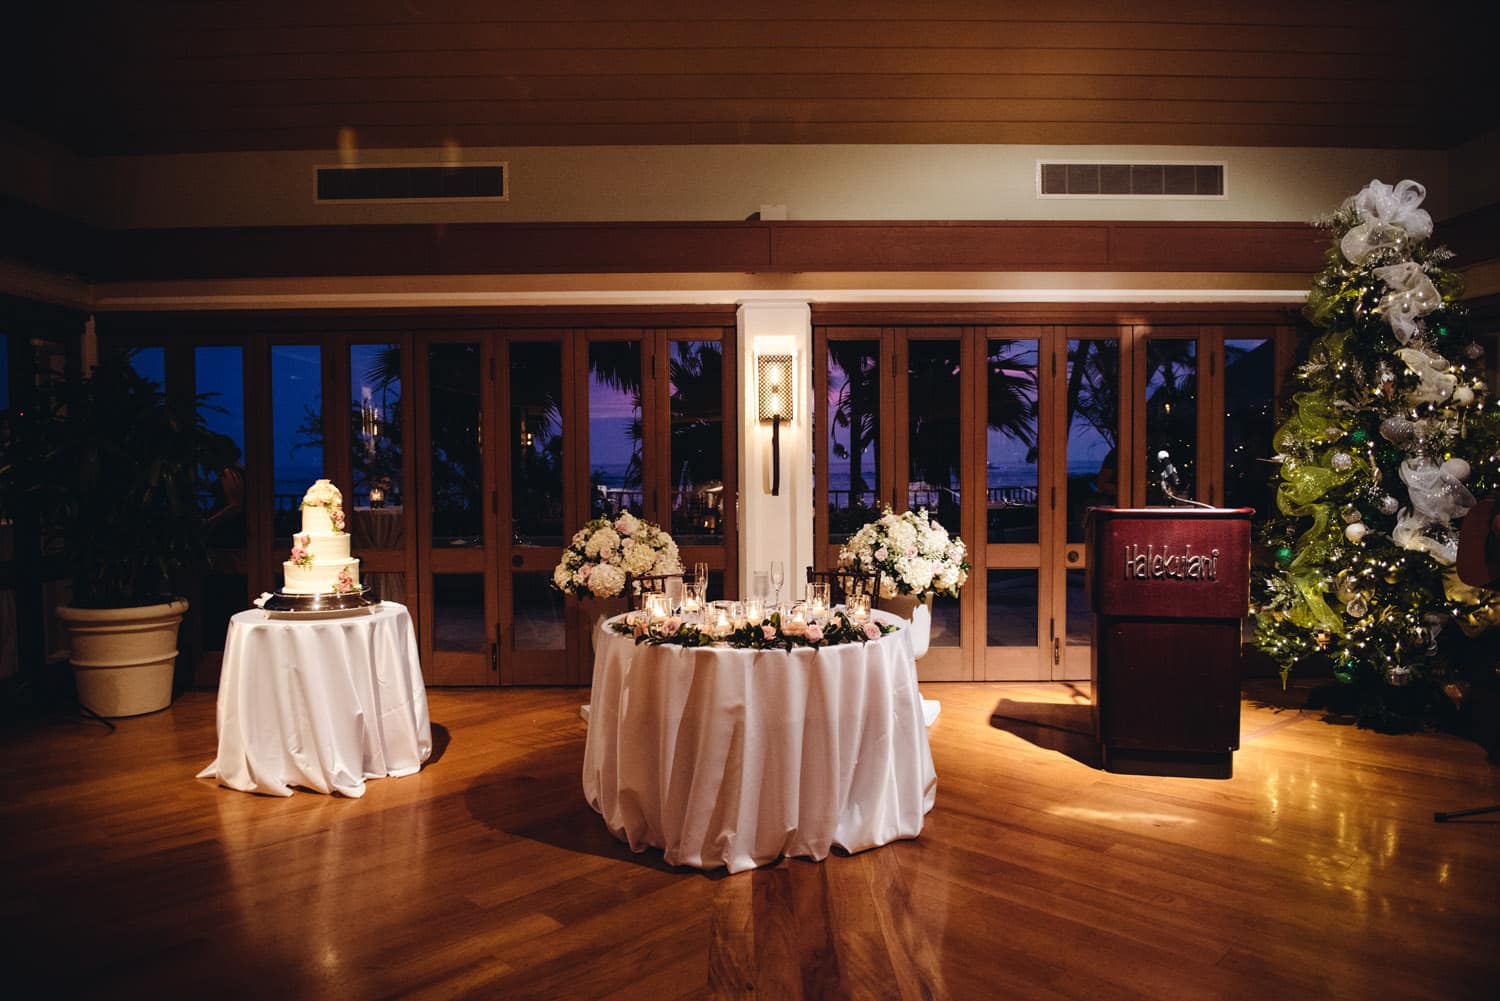 Hau Terrace Interior with Wedding Decor